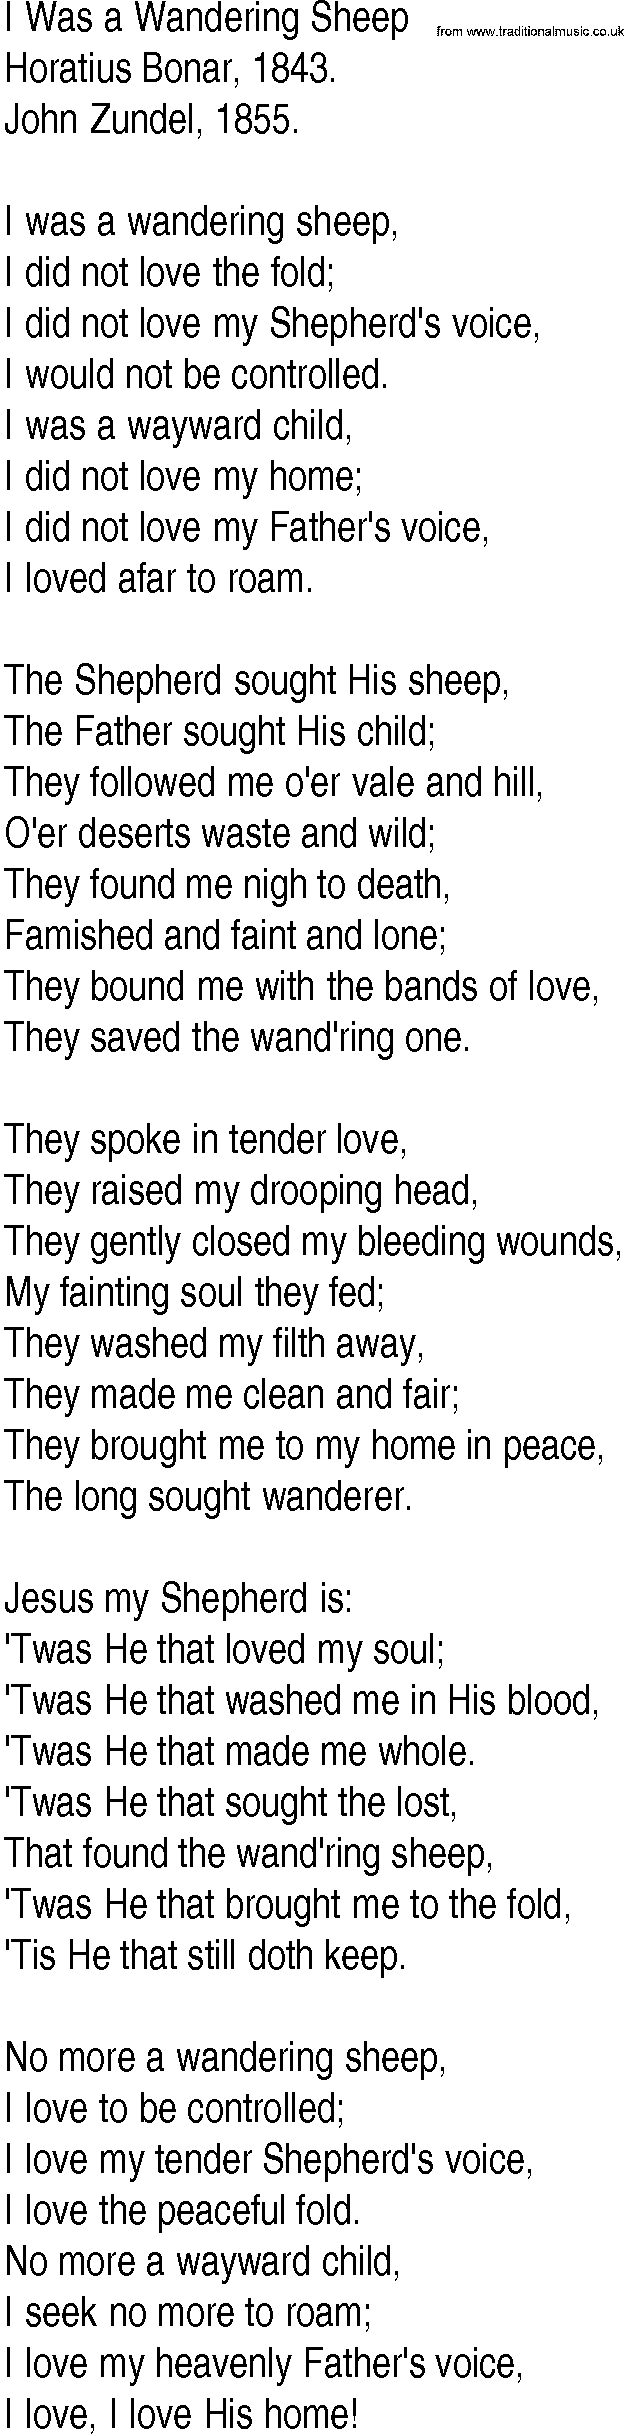 Hymn and Gospel Song: I Was a Wandering Sheep by Horatius Bonar lyrics